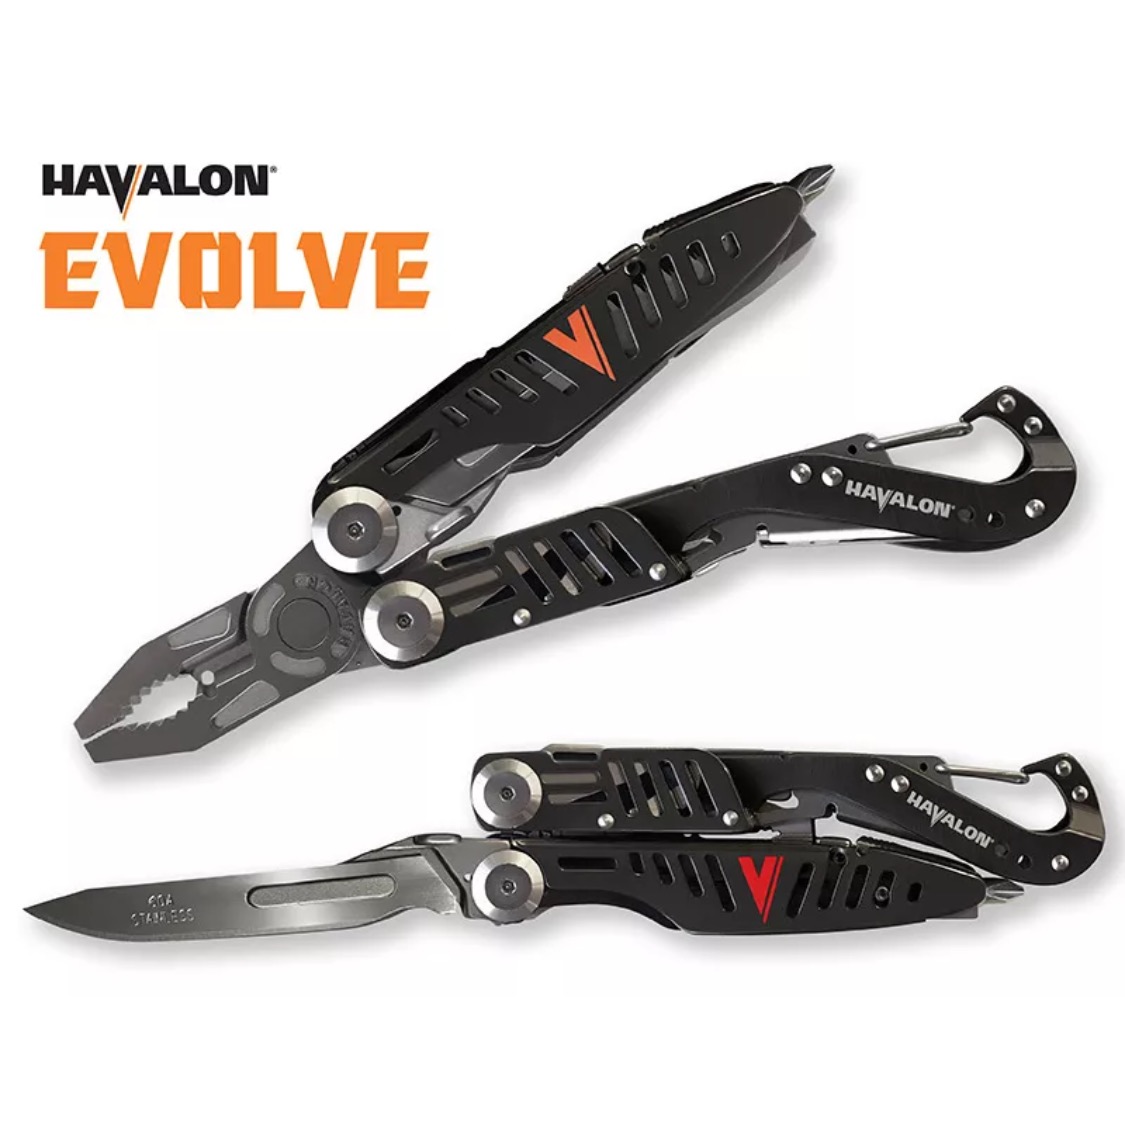 HAVALON KNIVES Evolve Shockey Series Black Hunting Multi Tool w/ Clip XTC-60AMTS 